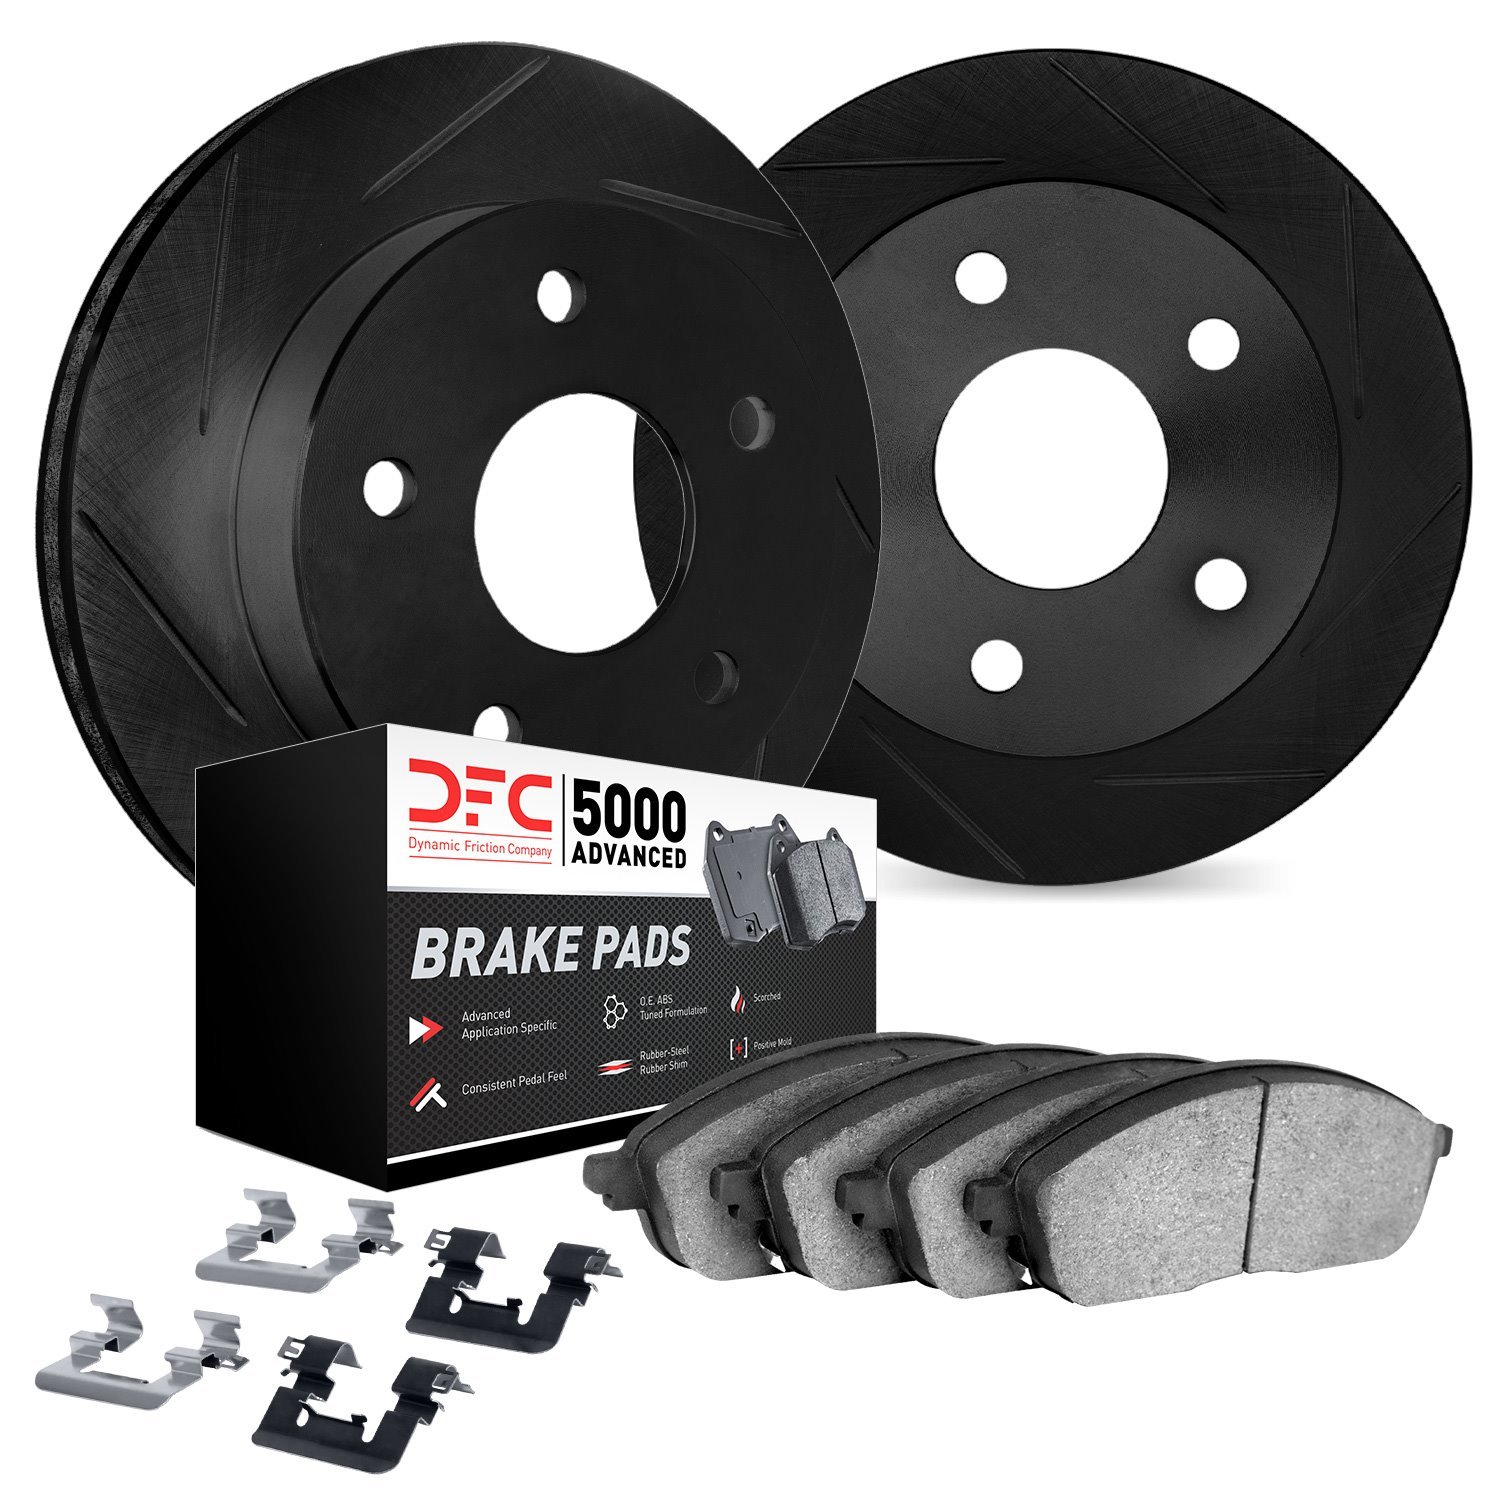 3512-80070 Slotted Brake Rotors w/5000 Advanced Brake Pads Kit & Hardware [Black], 2007-2015 Ford/Lincoln/Mercury/Mazda, Positio